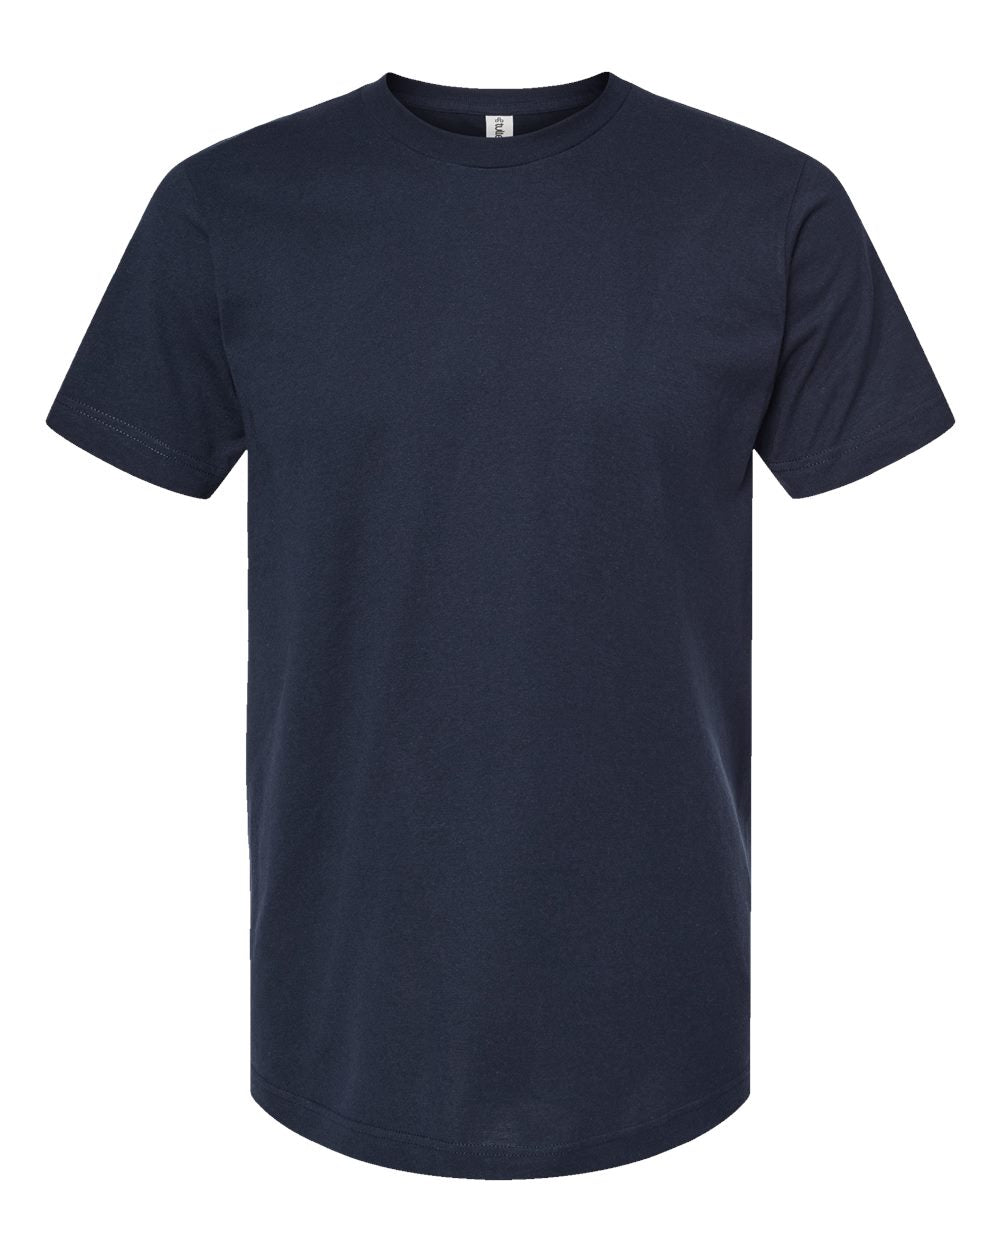 Pretreated Tultex 202 Unisex Fine Jersey T-Shirt - Navy